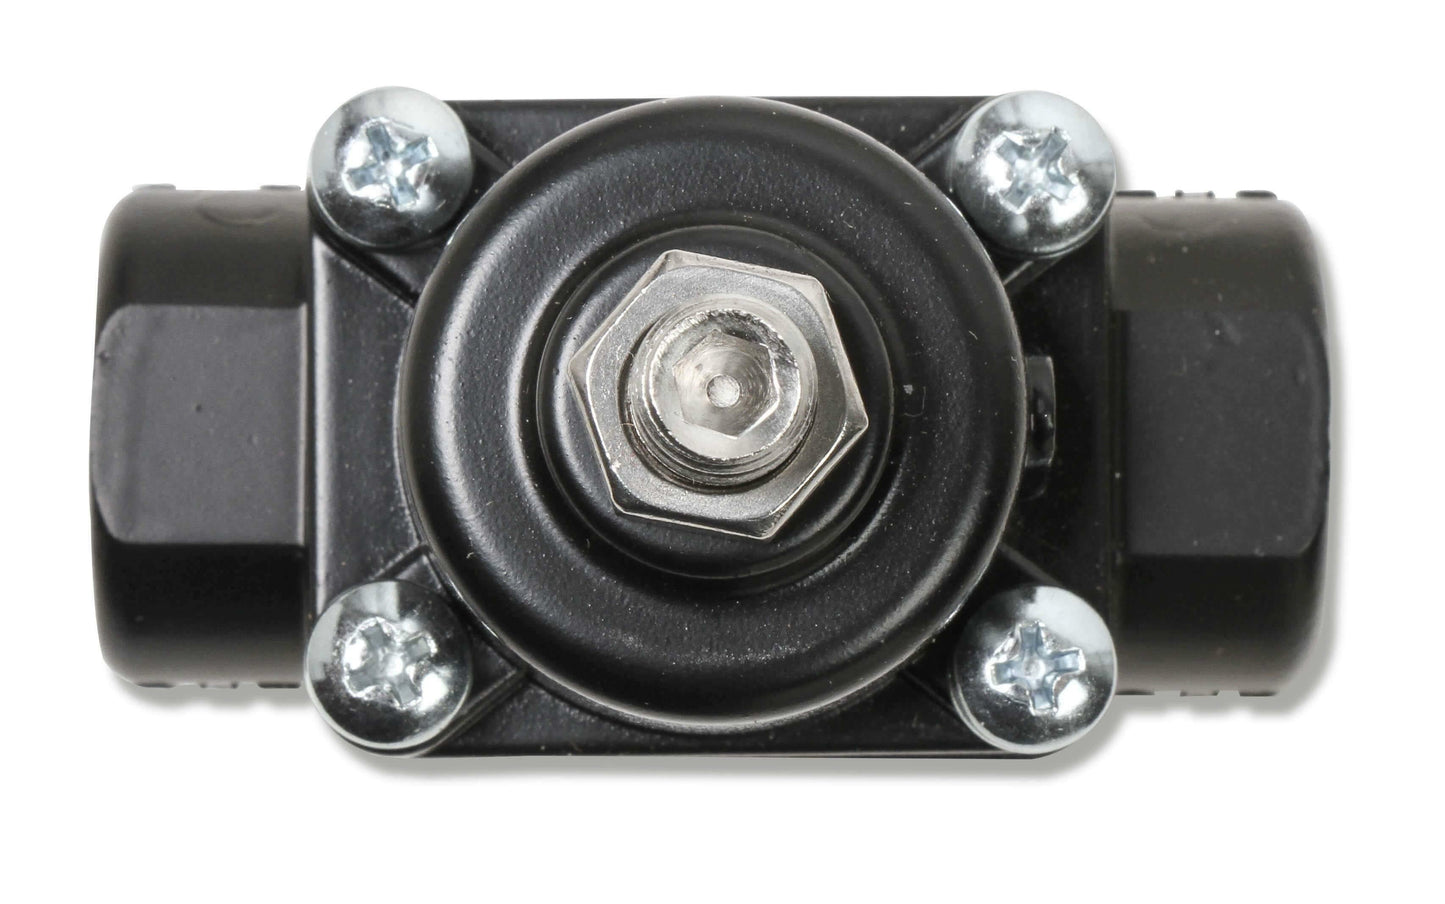 Earls Adjustable Fuel Pressure Regulator - Carbureted - Black - 1-4 PSI-12850ERL